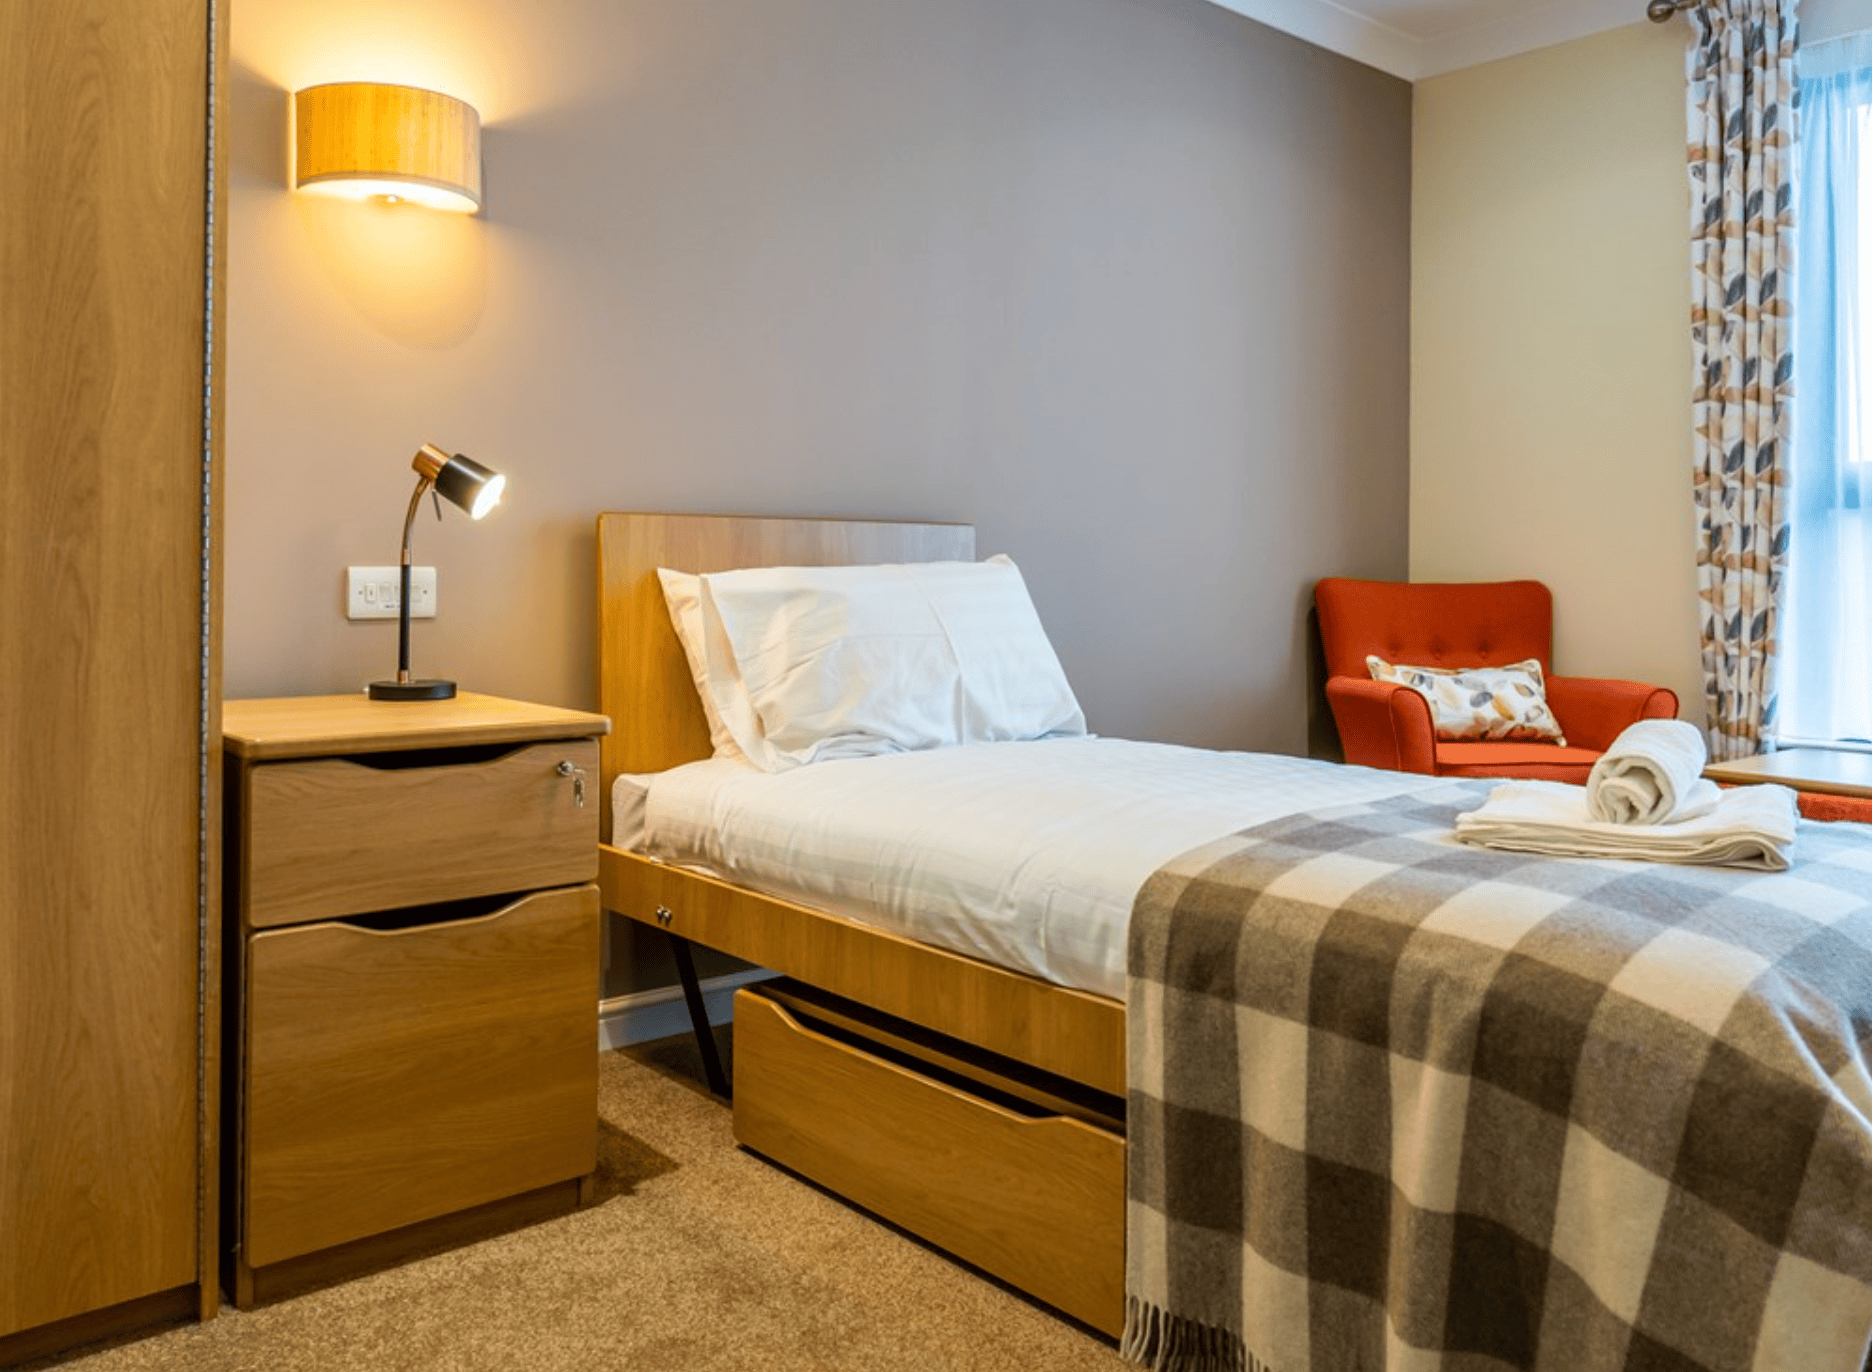 Bedroom at Alderwood House, Dumbarton